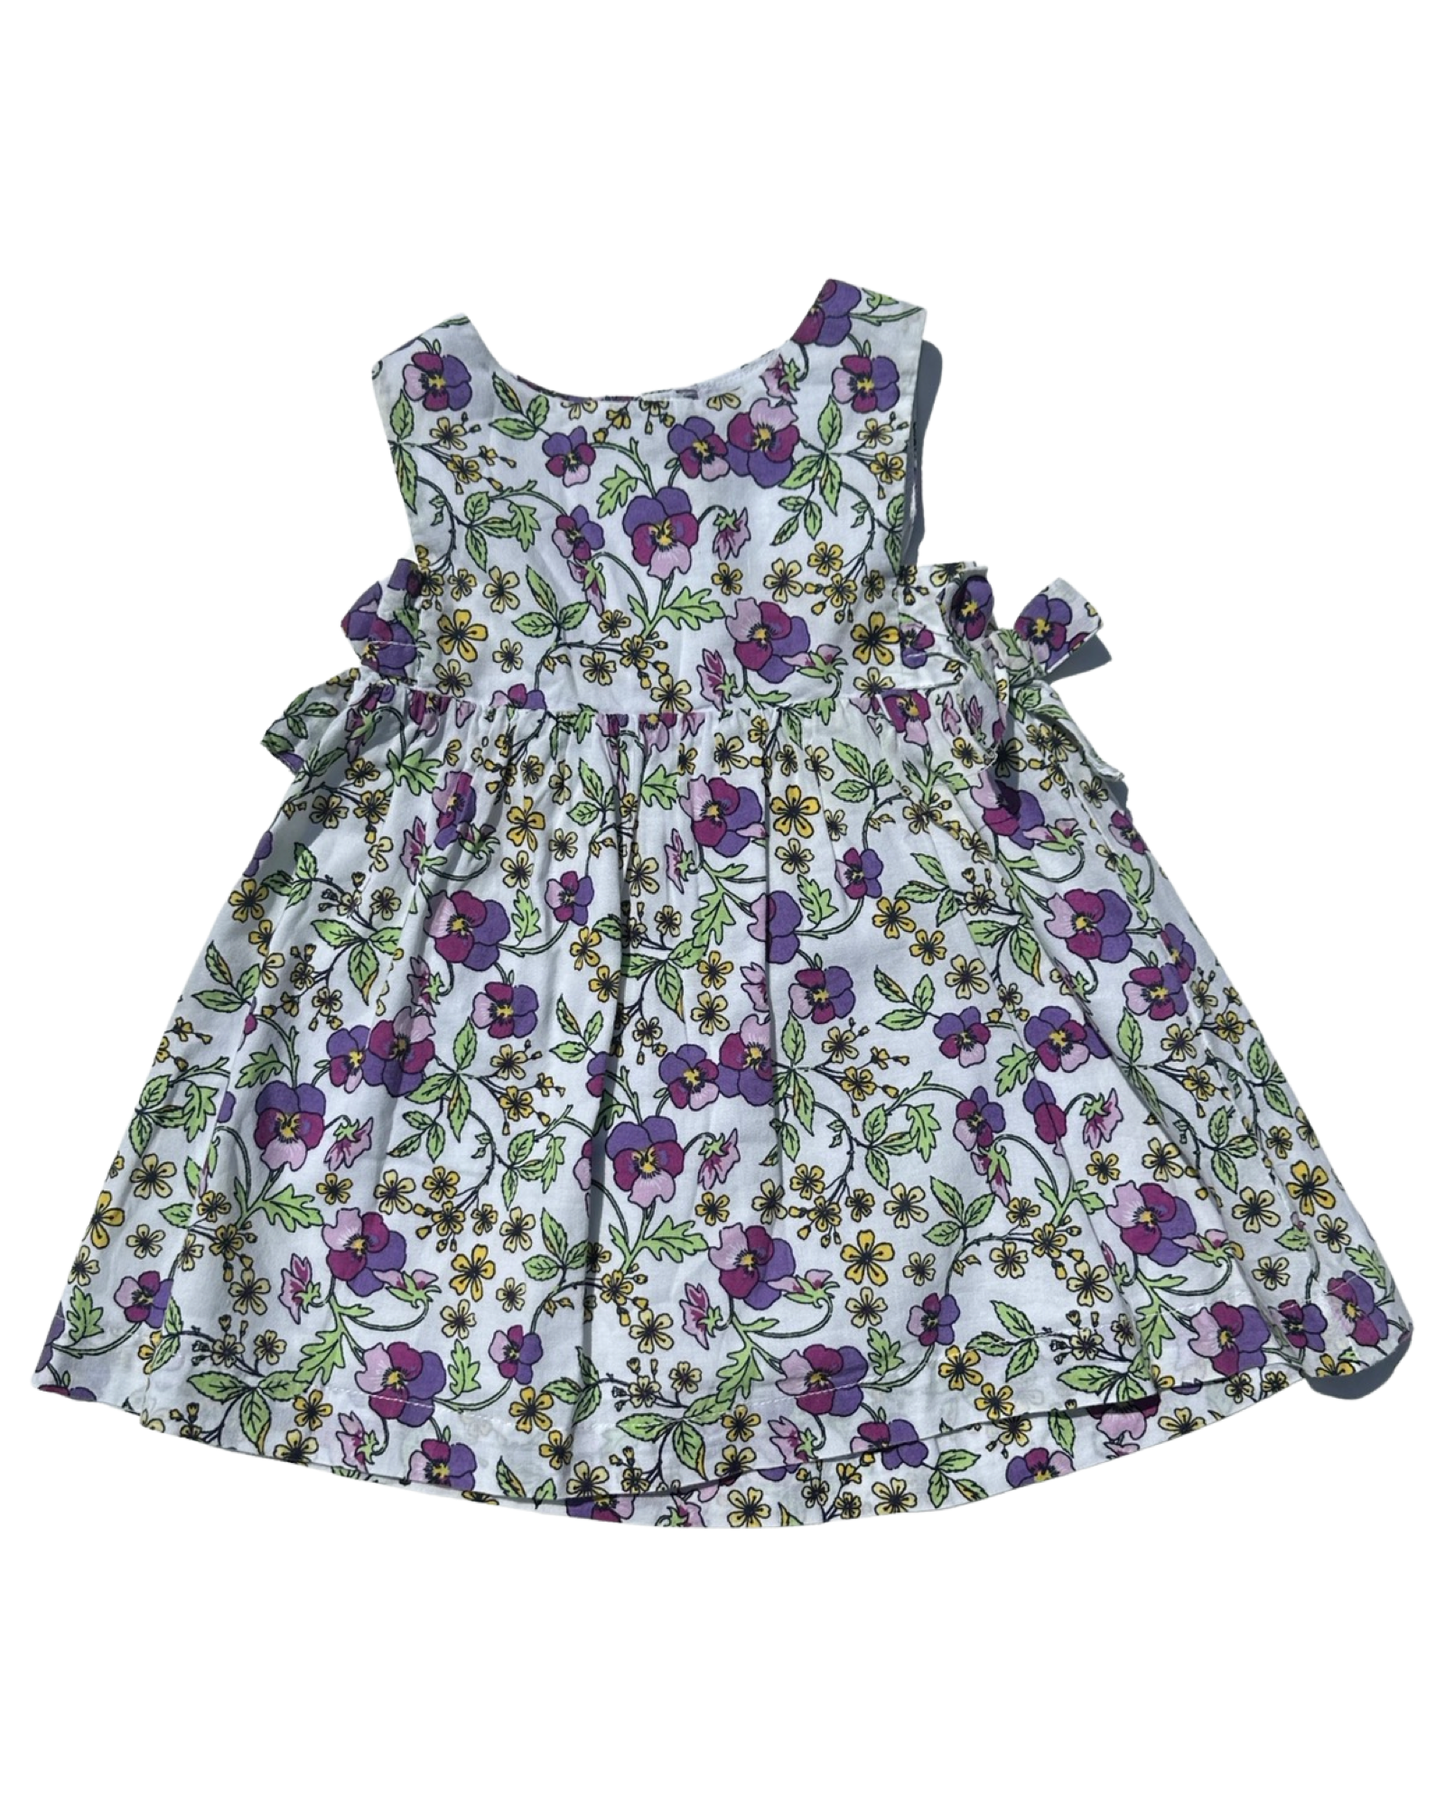 Baby Gap floral print dress (size 3-6mths)